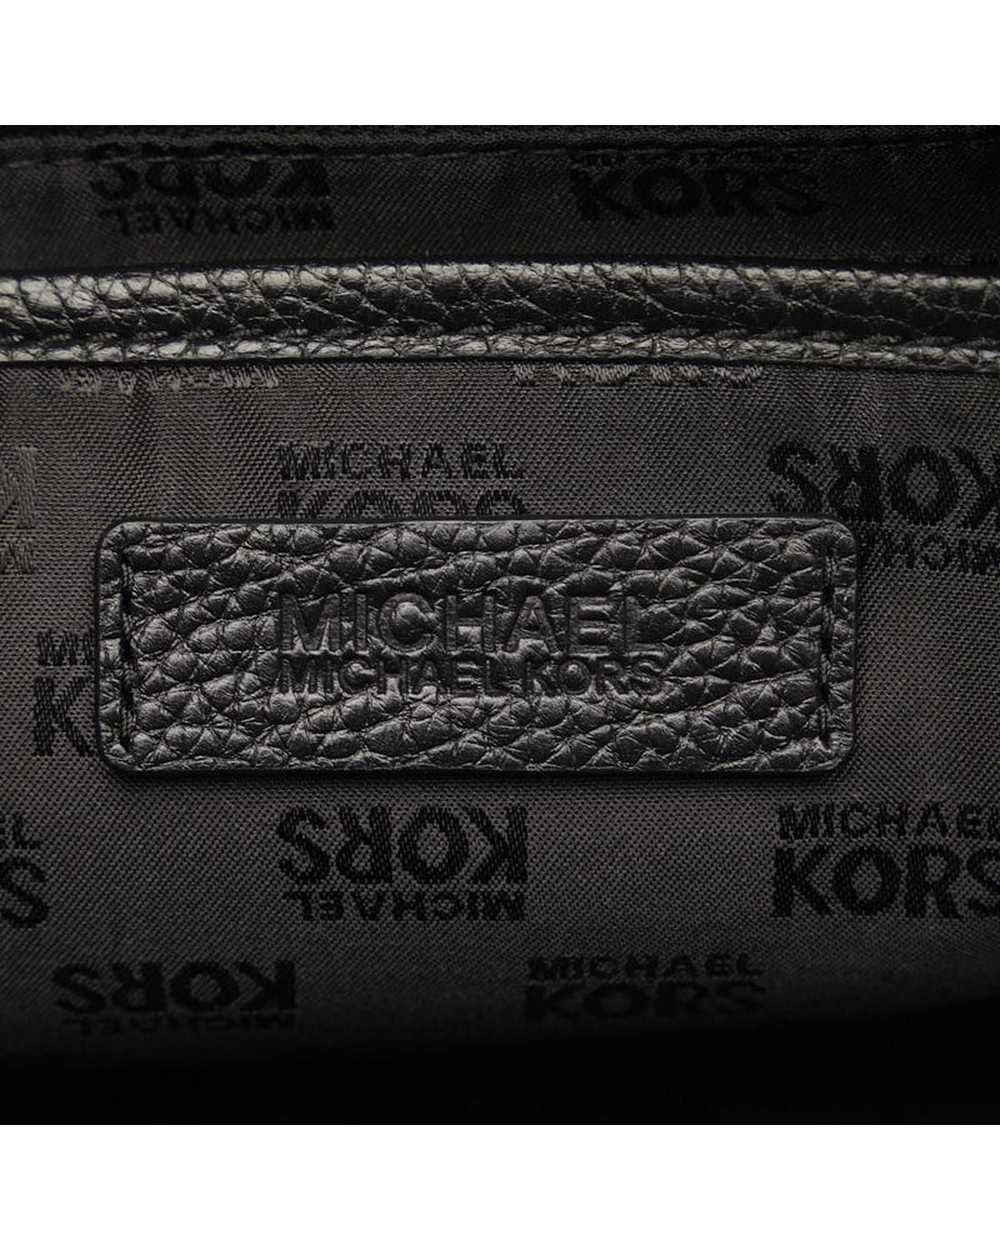 Michael Kors Studded Leather Abbey Backpack Bag - image 7